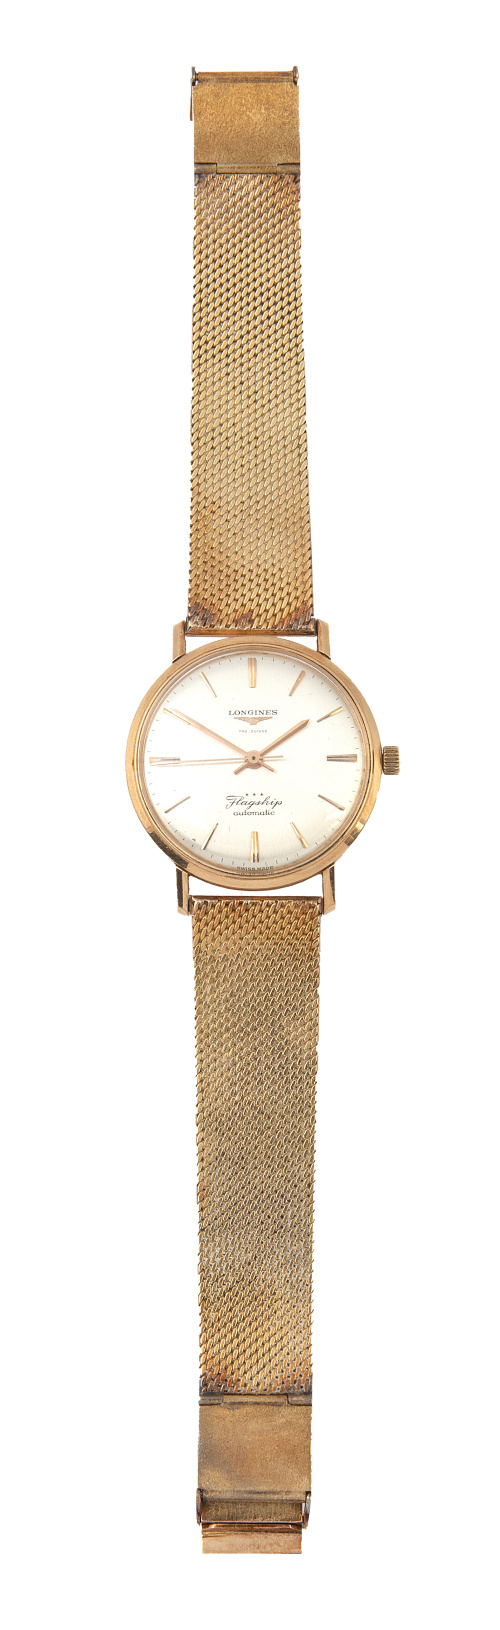 Reloj de caballero OMEGA años 60 con de pulsera malla 